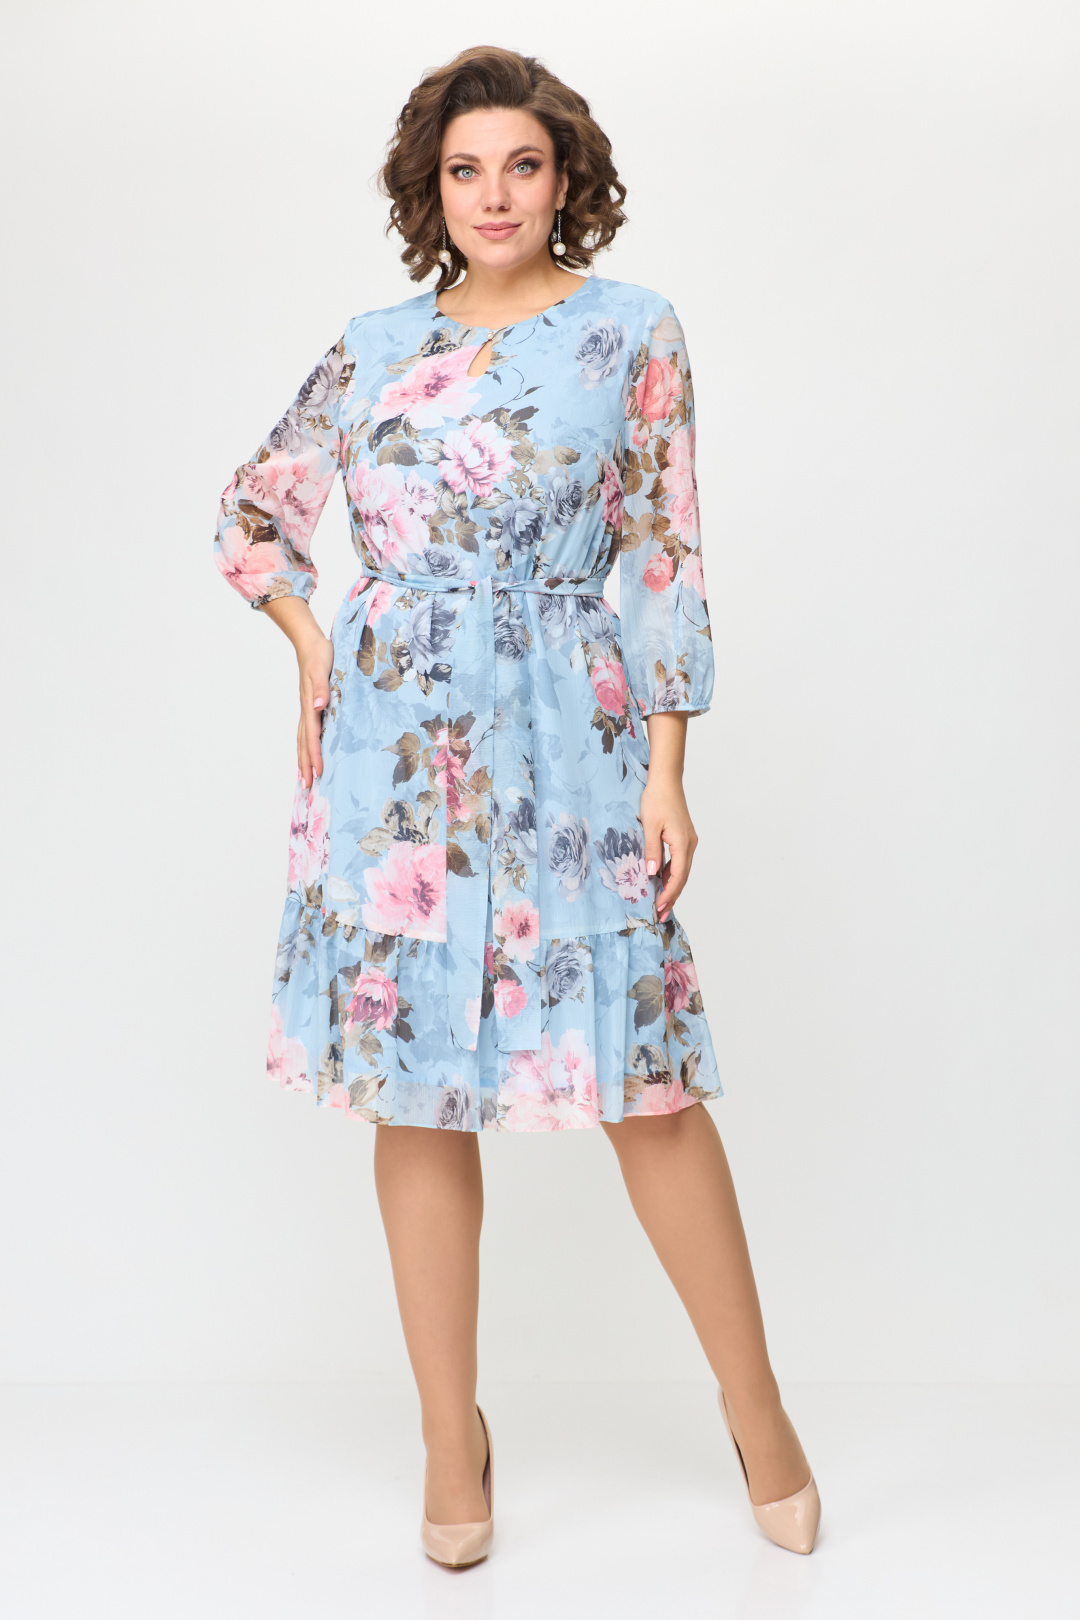 Платье Мода-Версаль 2453 голубой